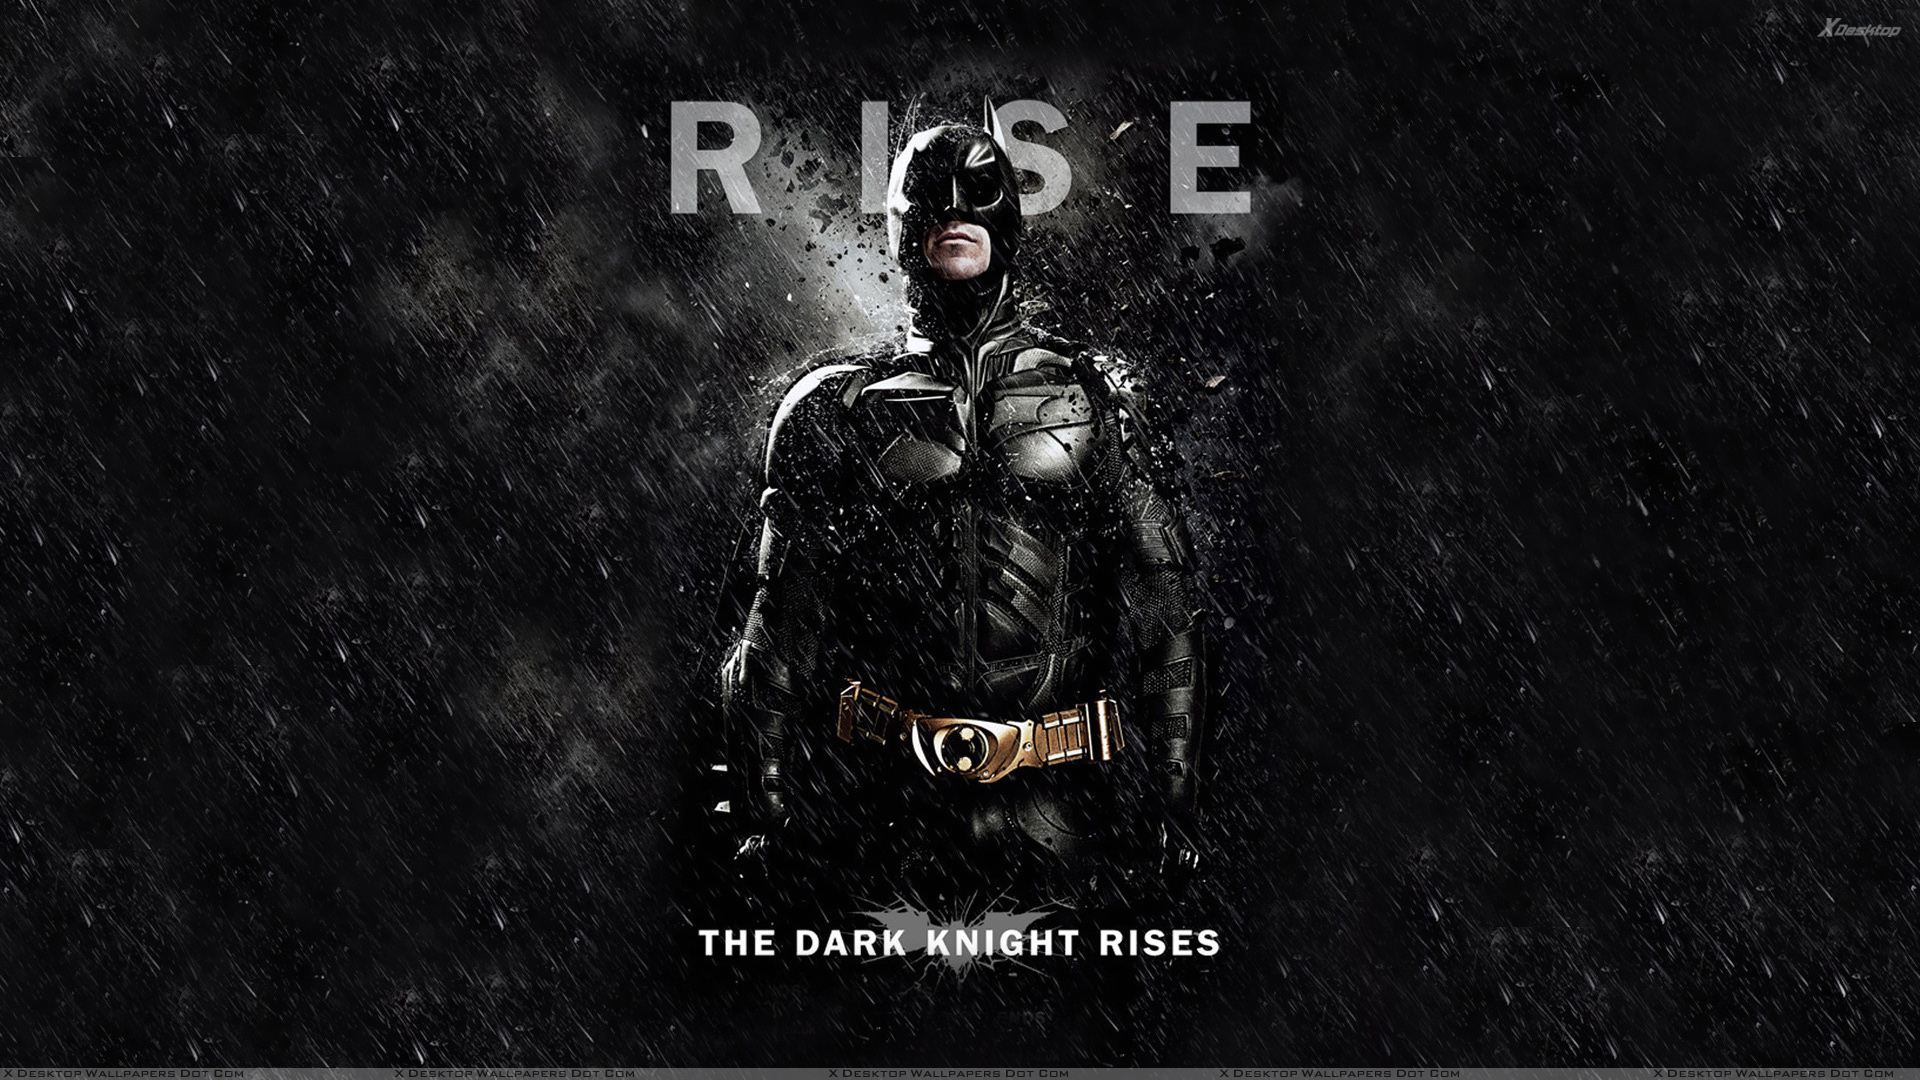 The Dark Knight Rises Christian Bale As Batman And Black Rainy